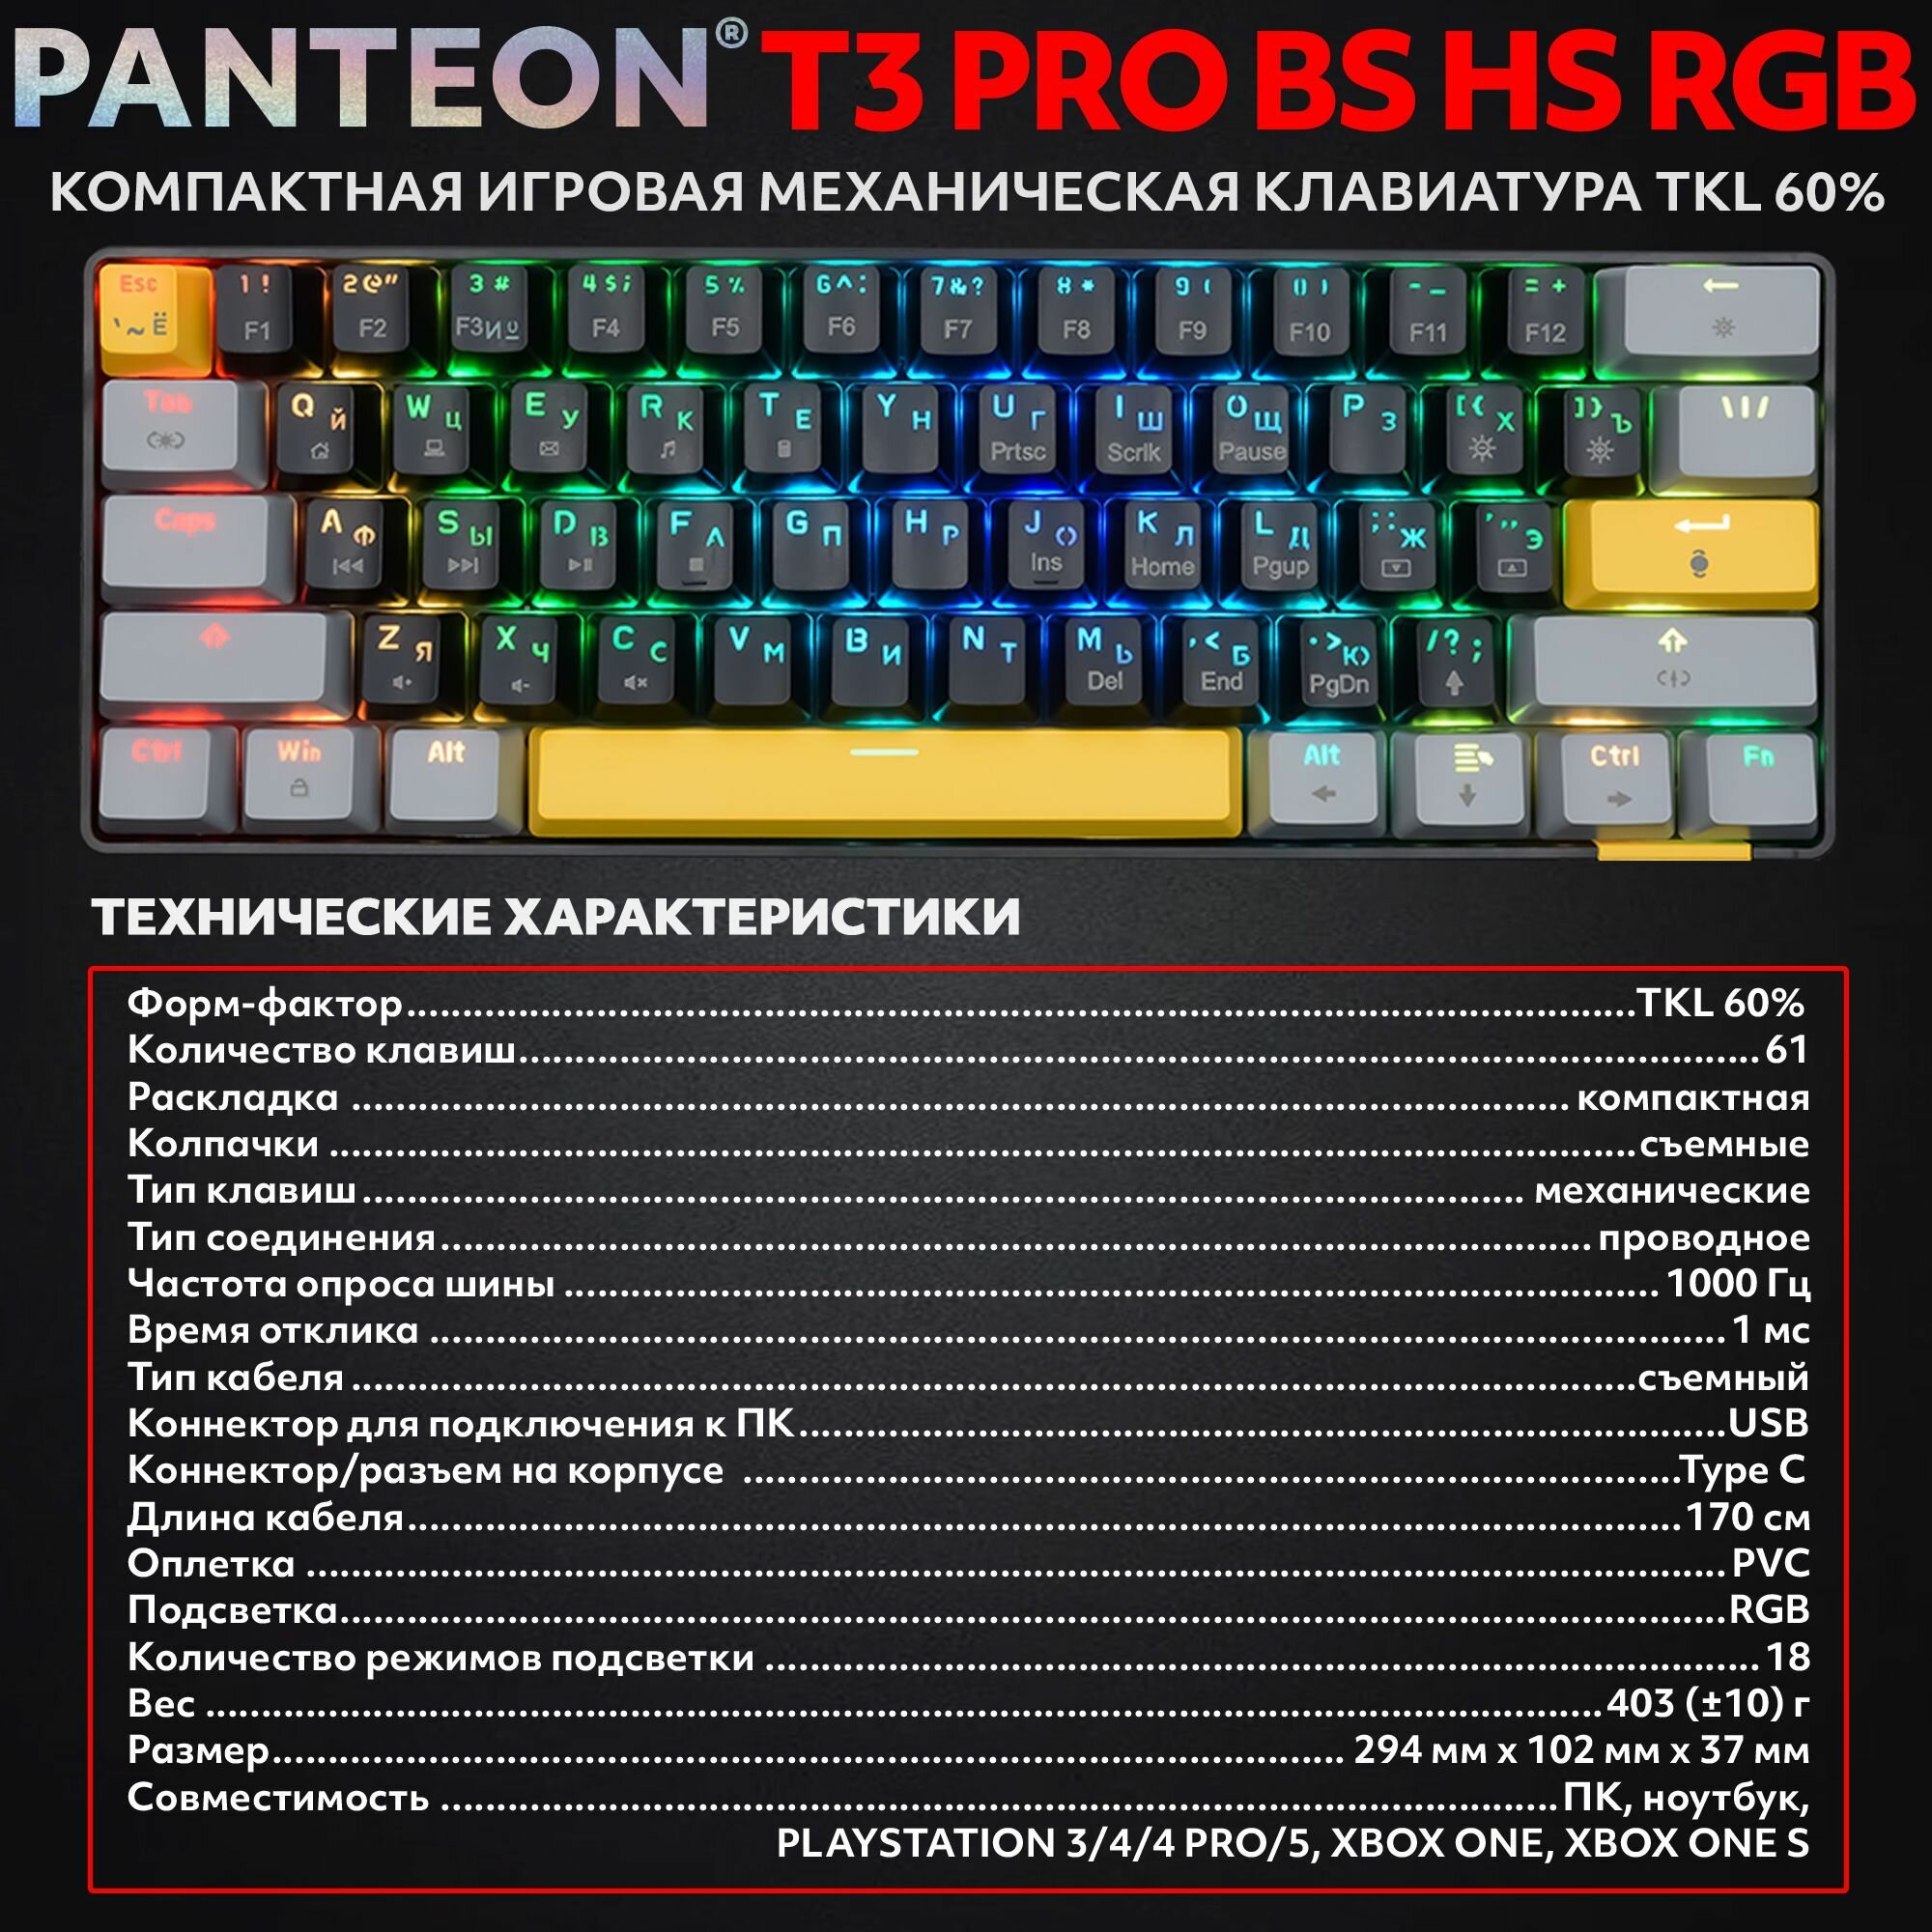 PANTEON T3 PRO BS HS RGB Black-Grey (41) Механическая клавиатура (Jixian Black 61 кл HotSwap USB)